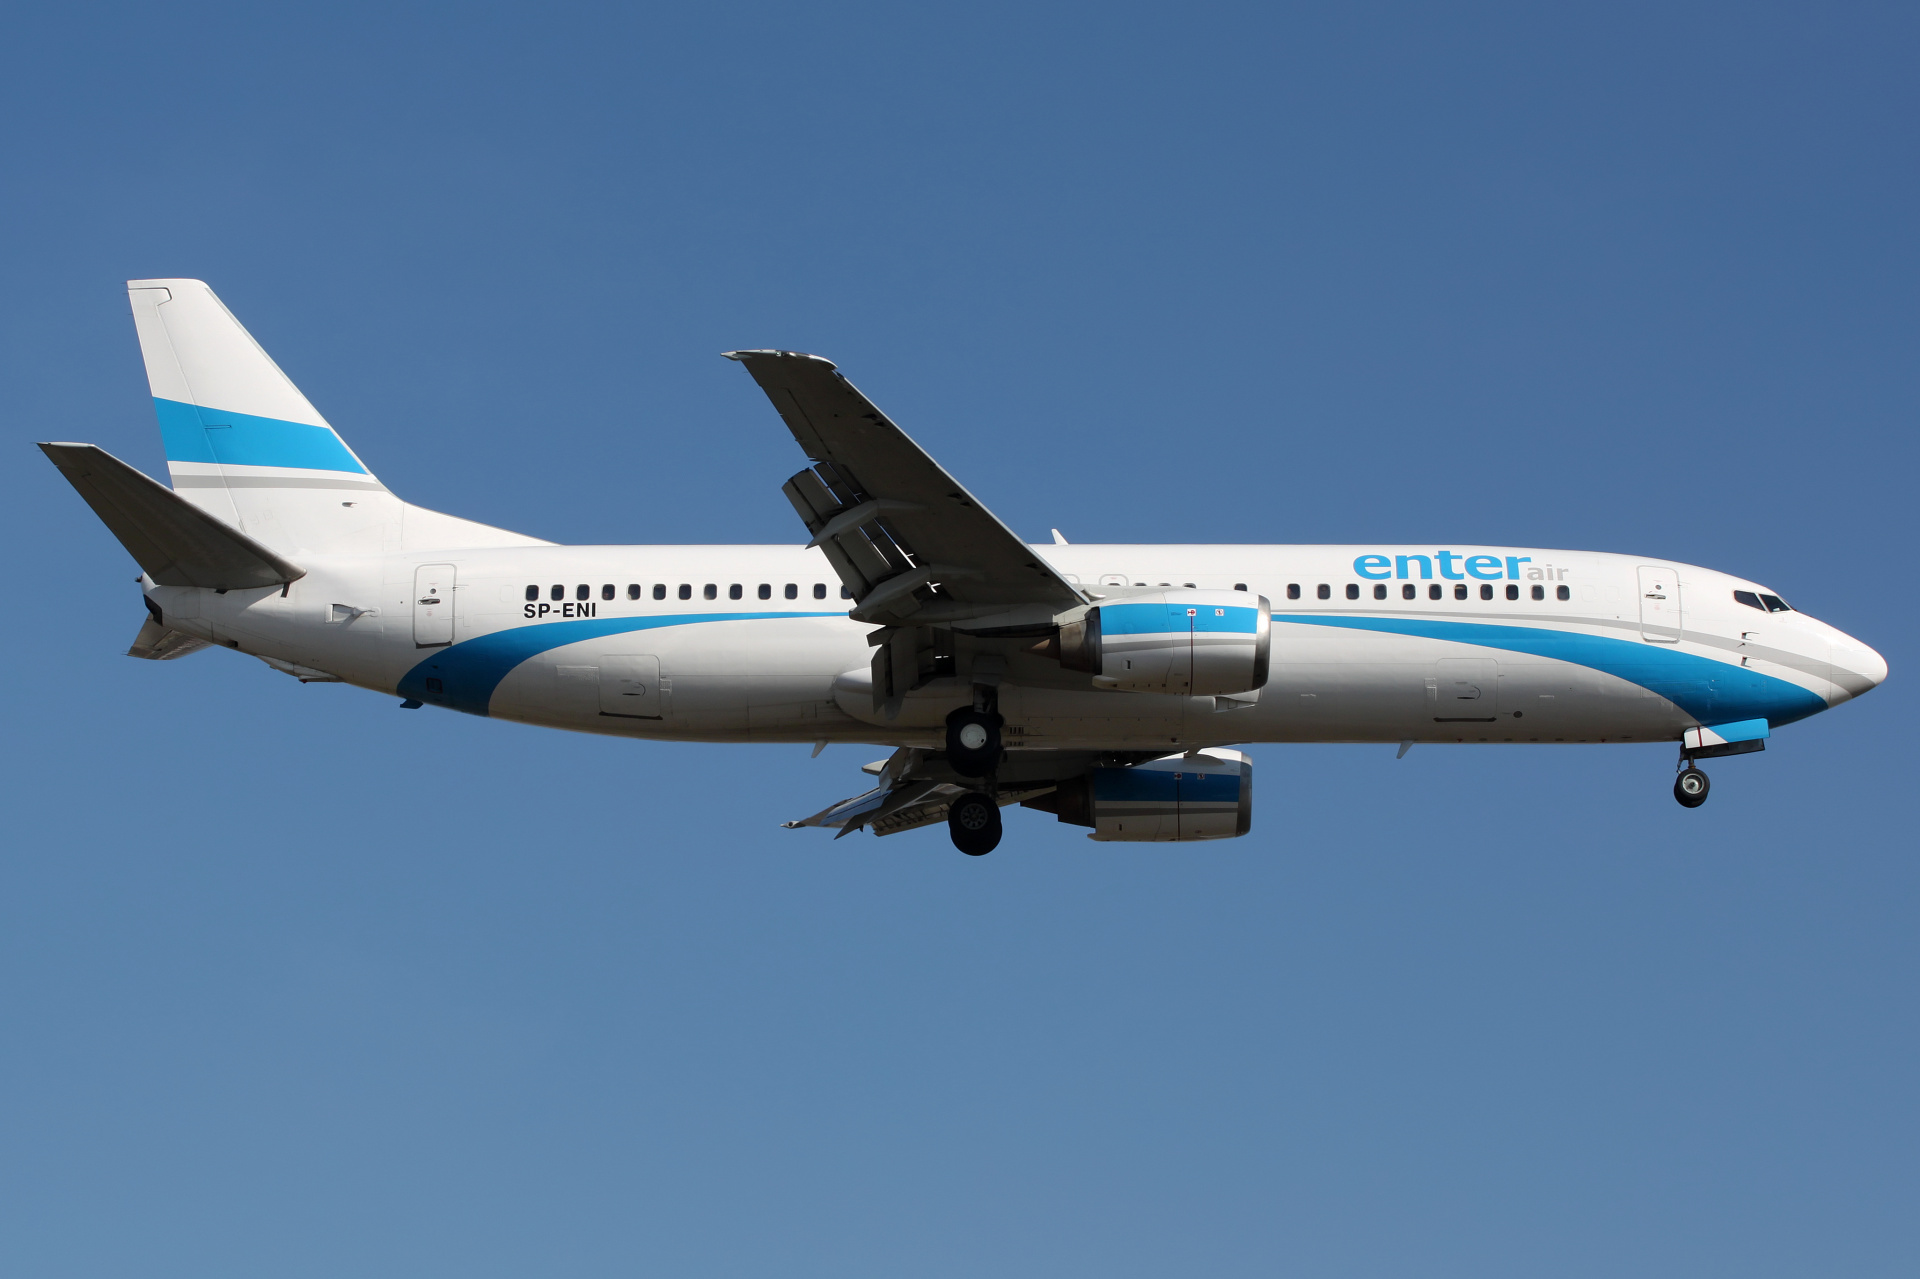 SP-ENI (Samoloty » Spotting na EPWA » Boeing 737-400 » Enter Air)